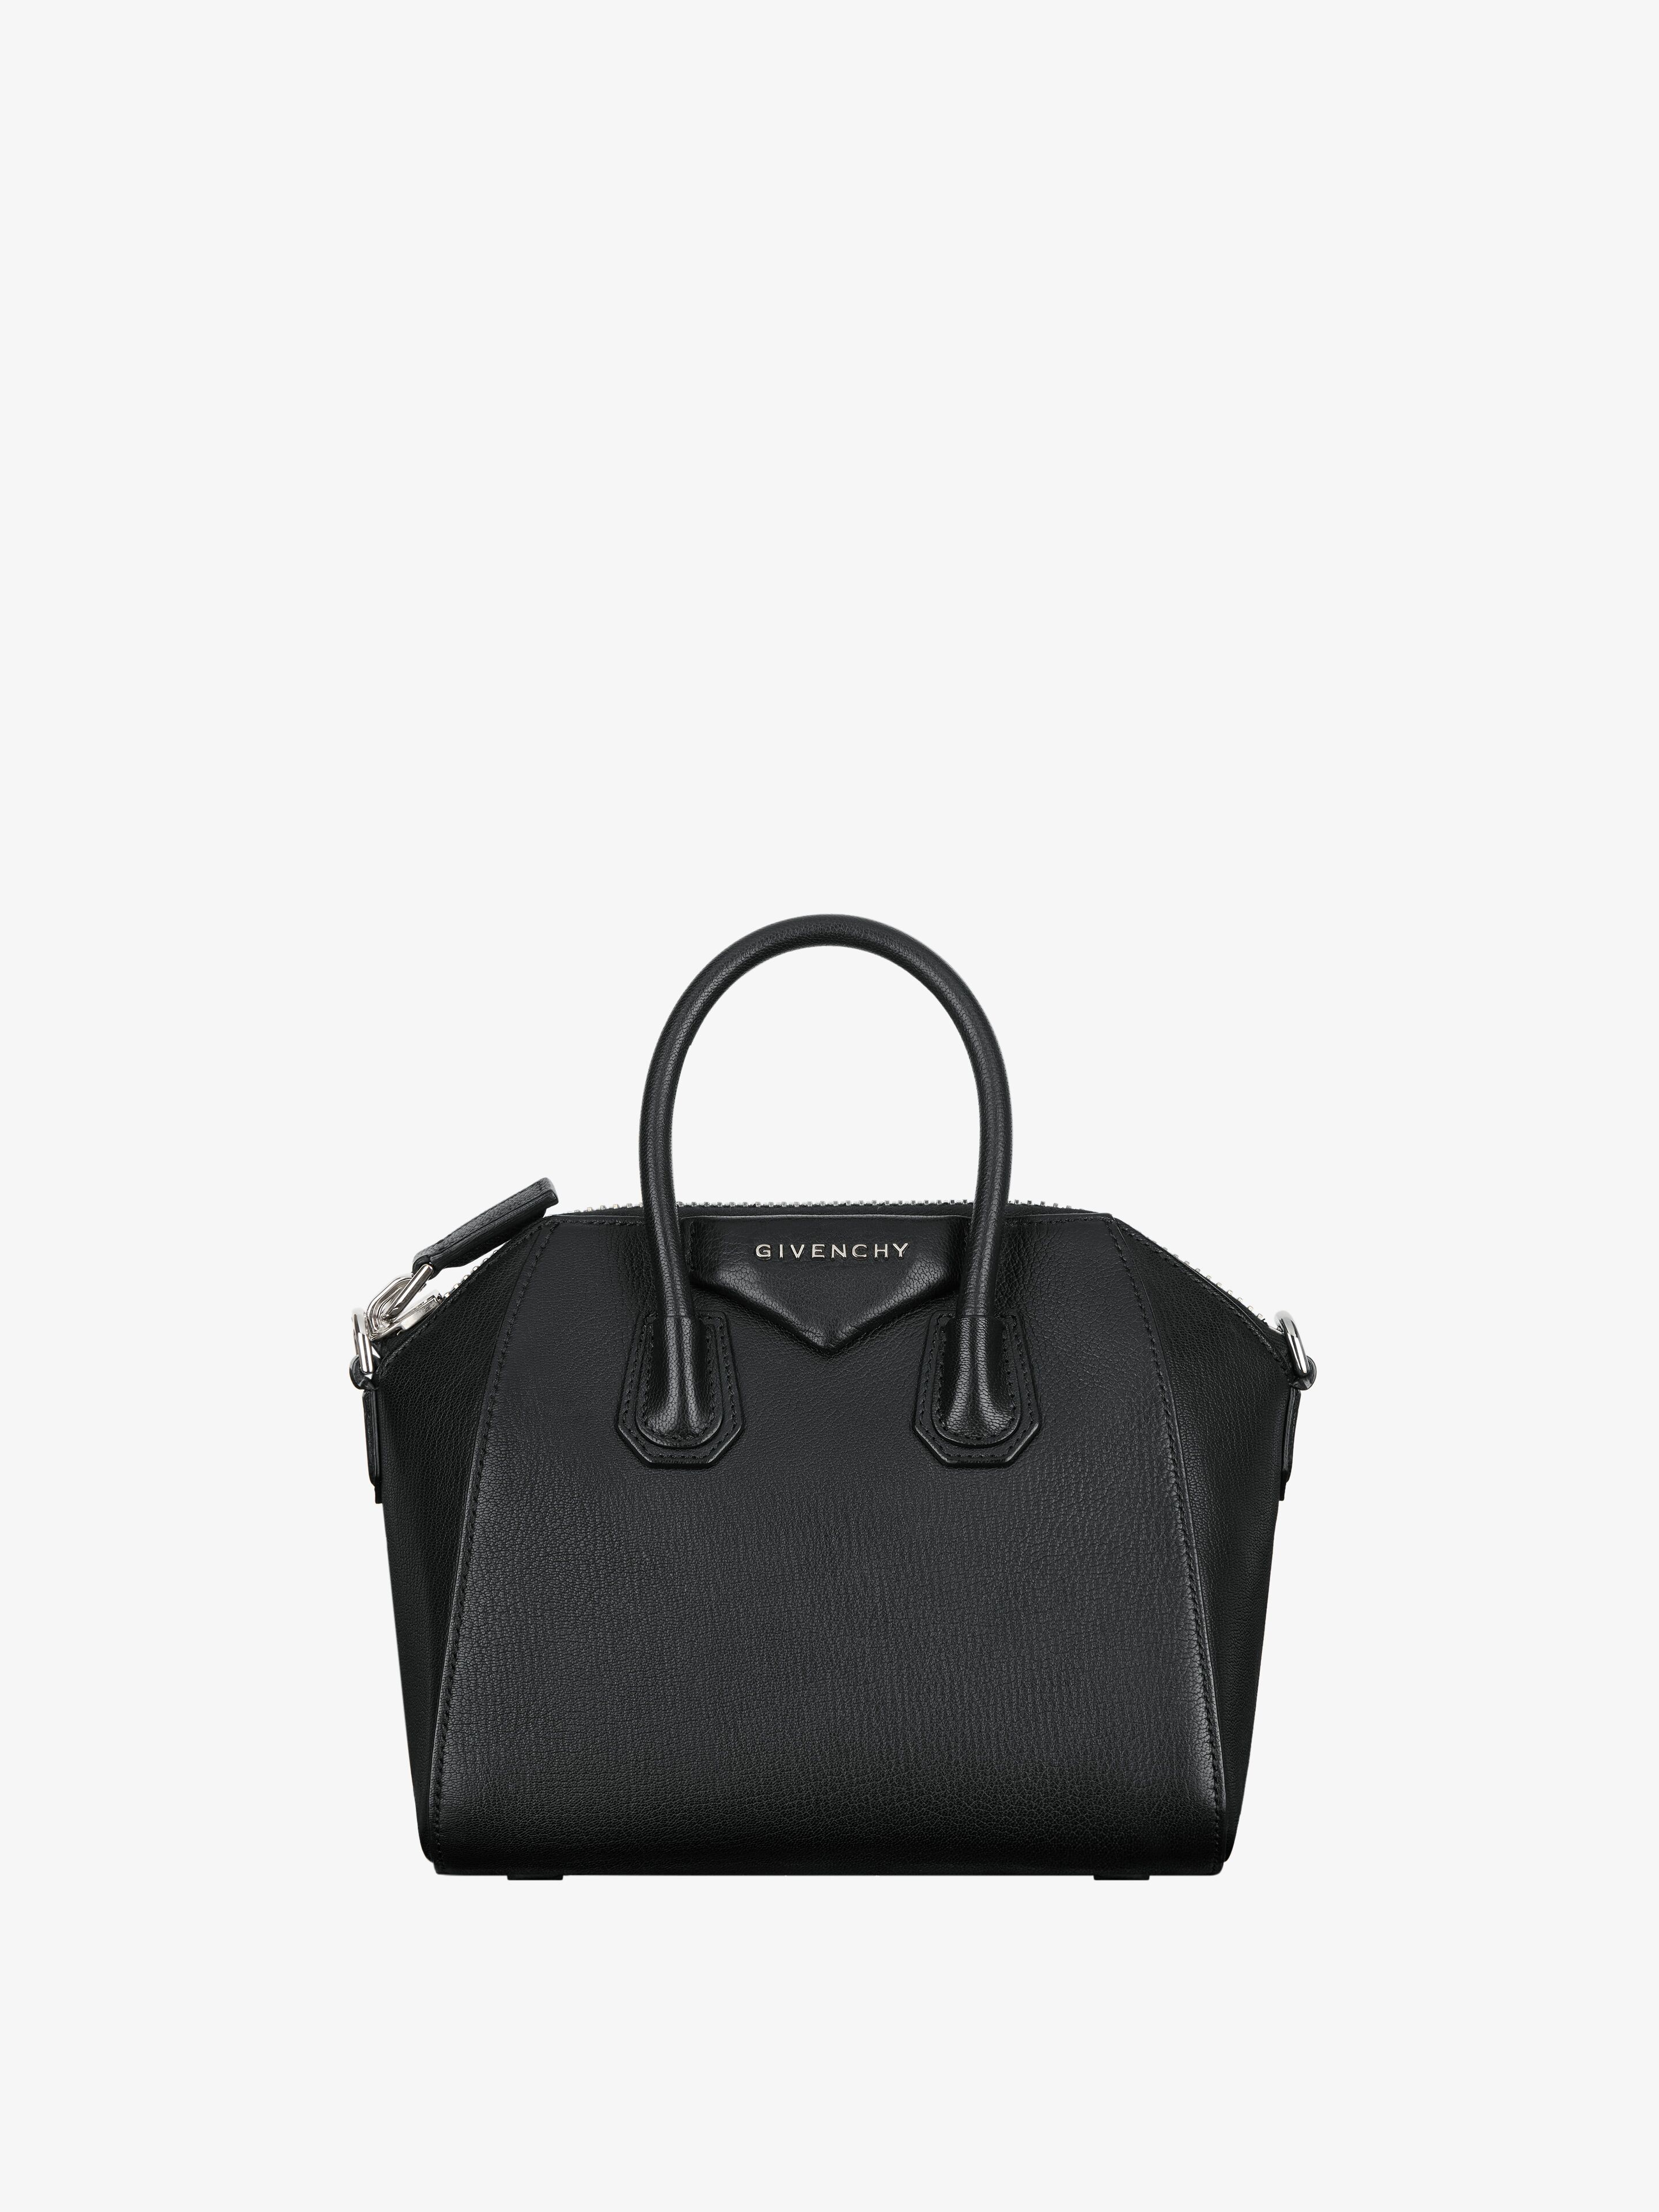 Givenchy Antigona Cognac Satchel #bags | Fashion jackson, Fashion handbags,  Bags